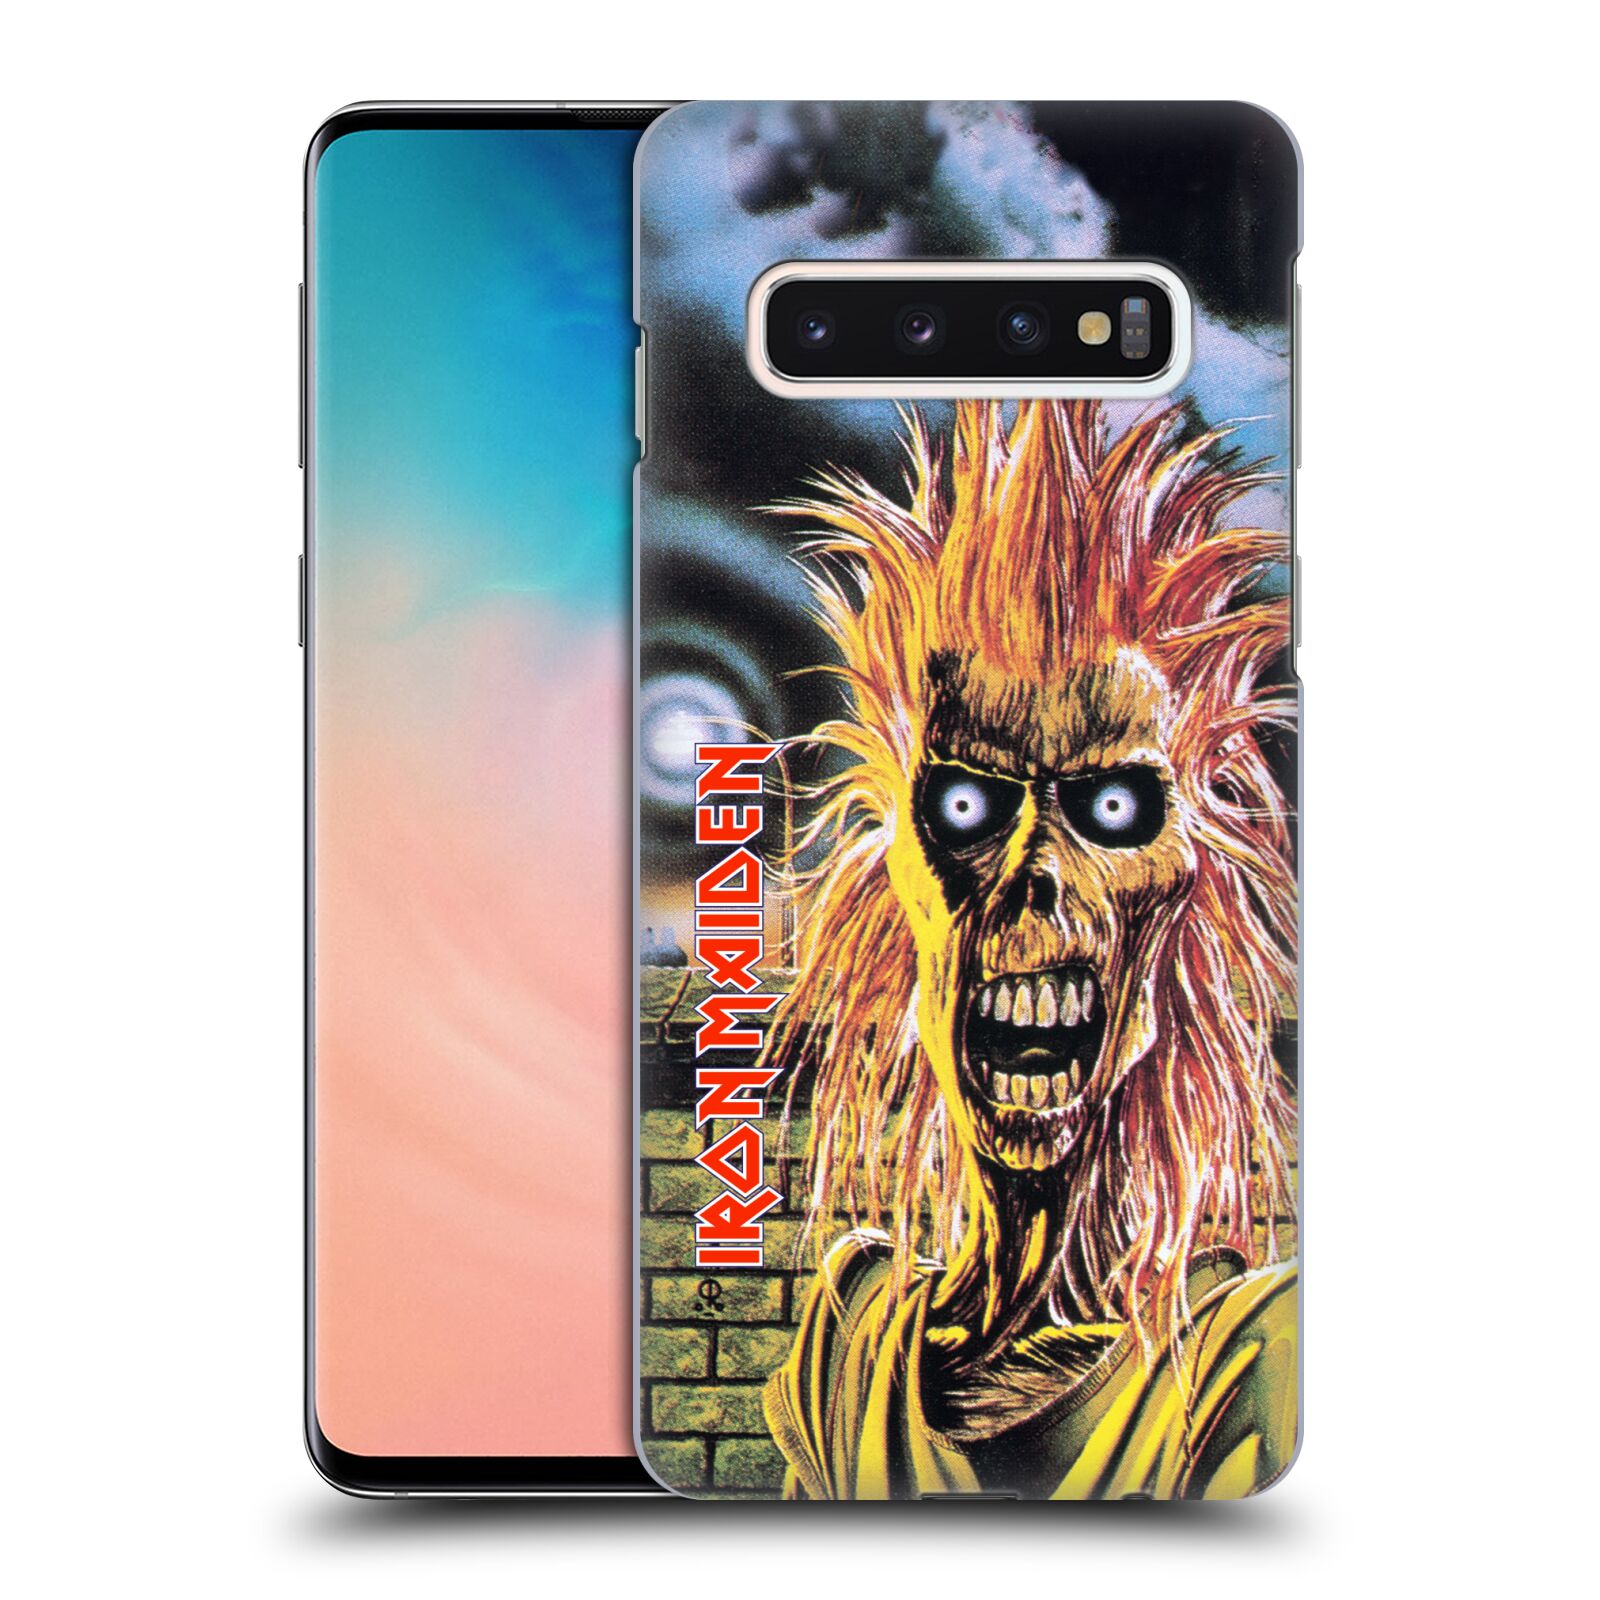 Pouzdro na mobil Samsung Galaxy S10 - HEAD CASE - Heavymetalová skupina Iron Maiden punker